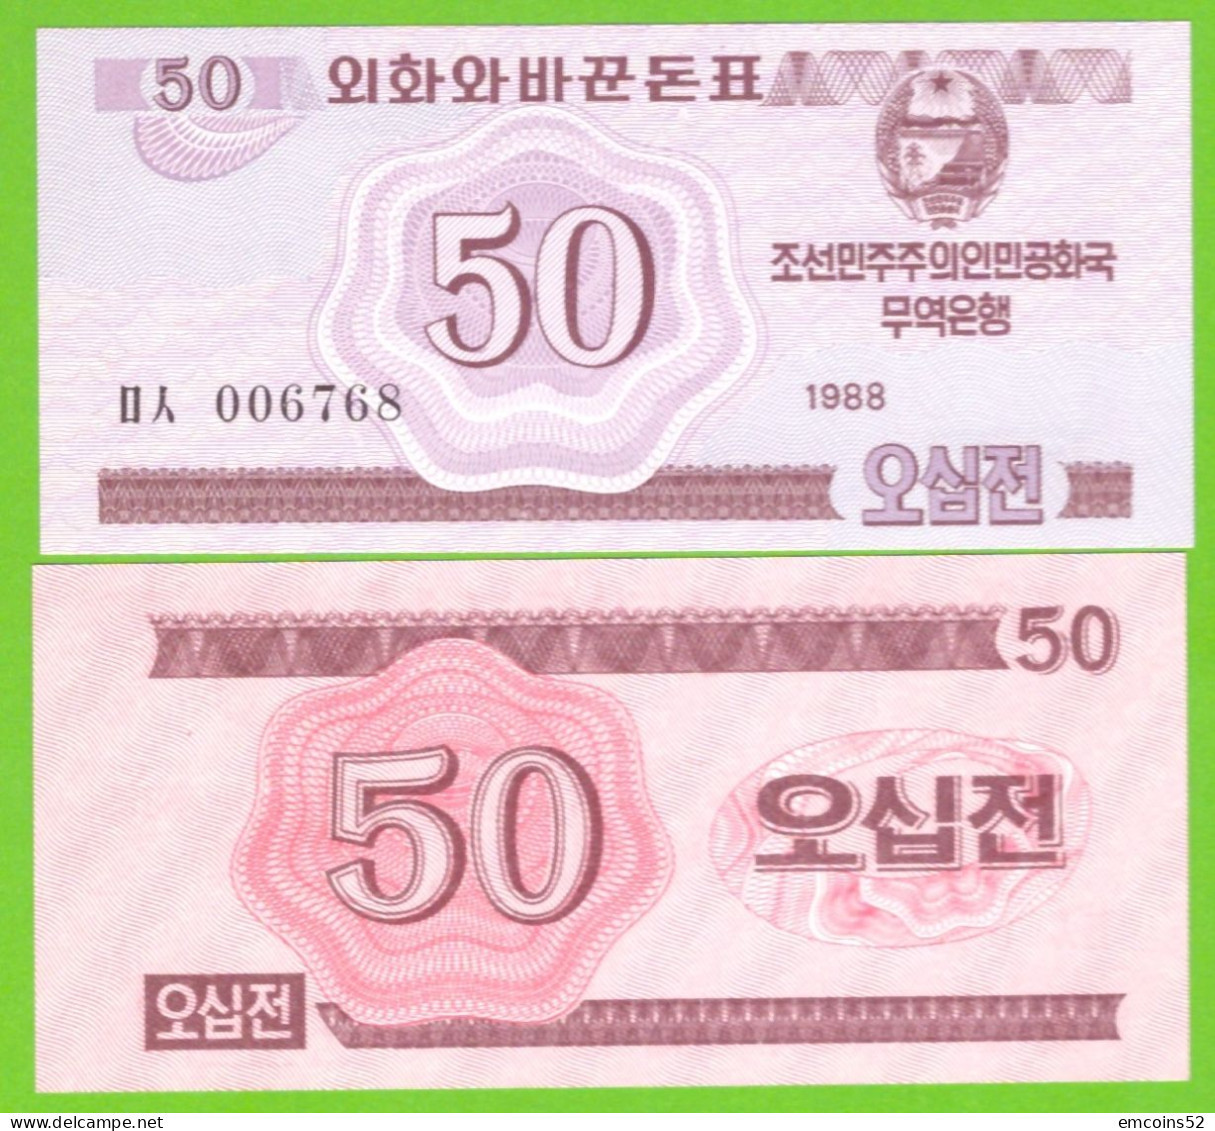 KOREA NORTH 50 CHON 1988 P-34 UNC - Korea, North